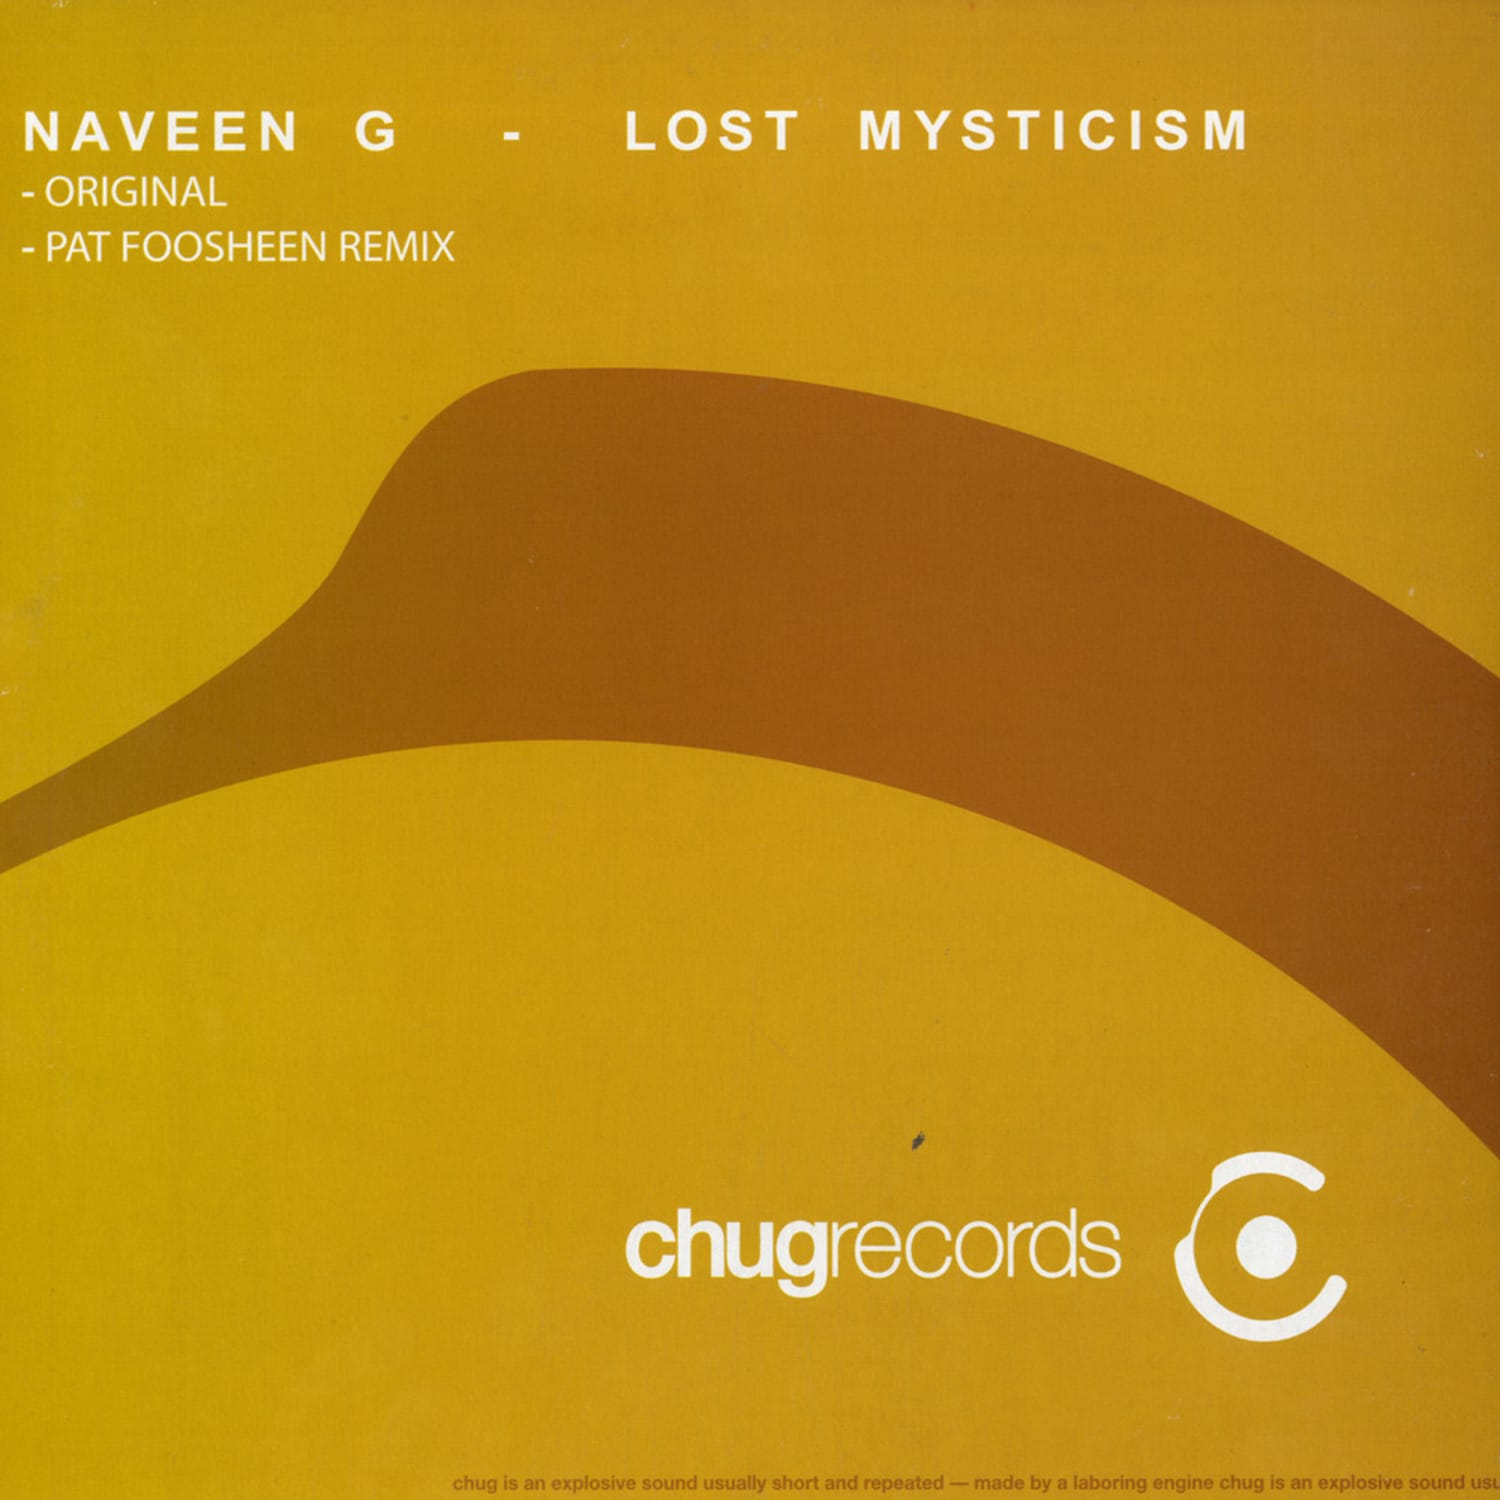 Naveen G - LOST MYSTICISM